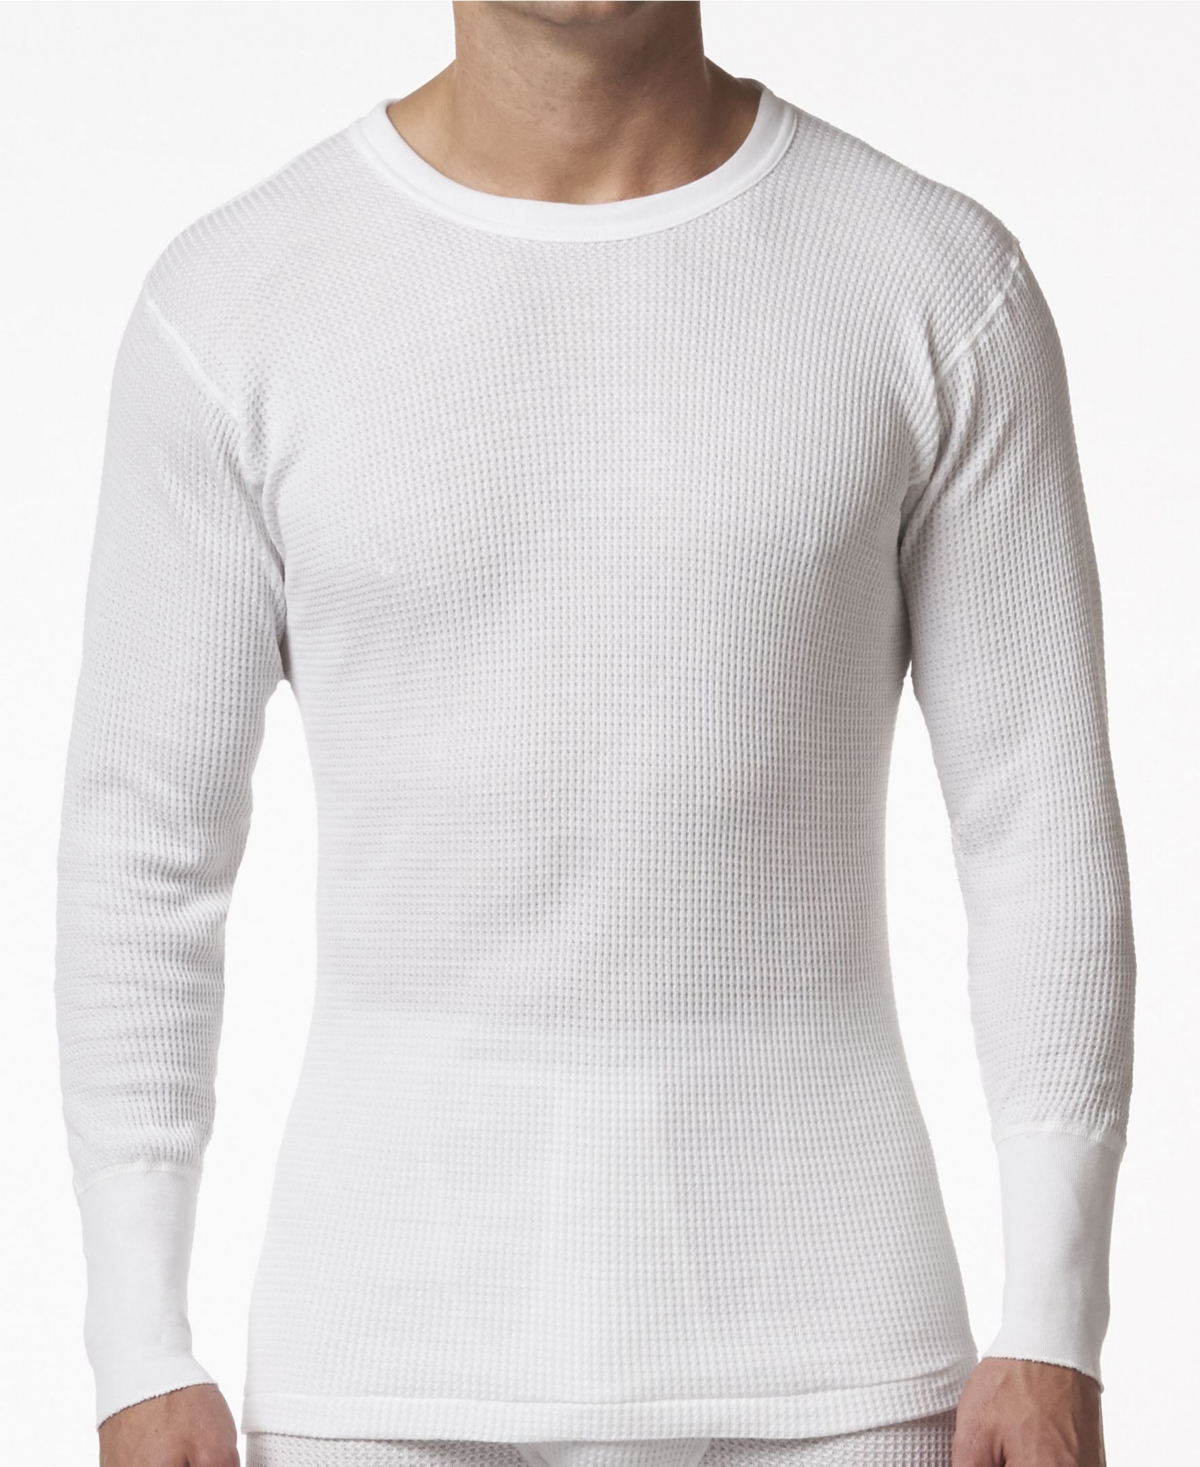 Men's Waffle Knit Thermal Long Sleeve Shirt - White